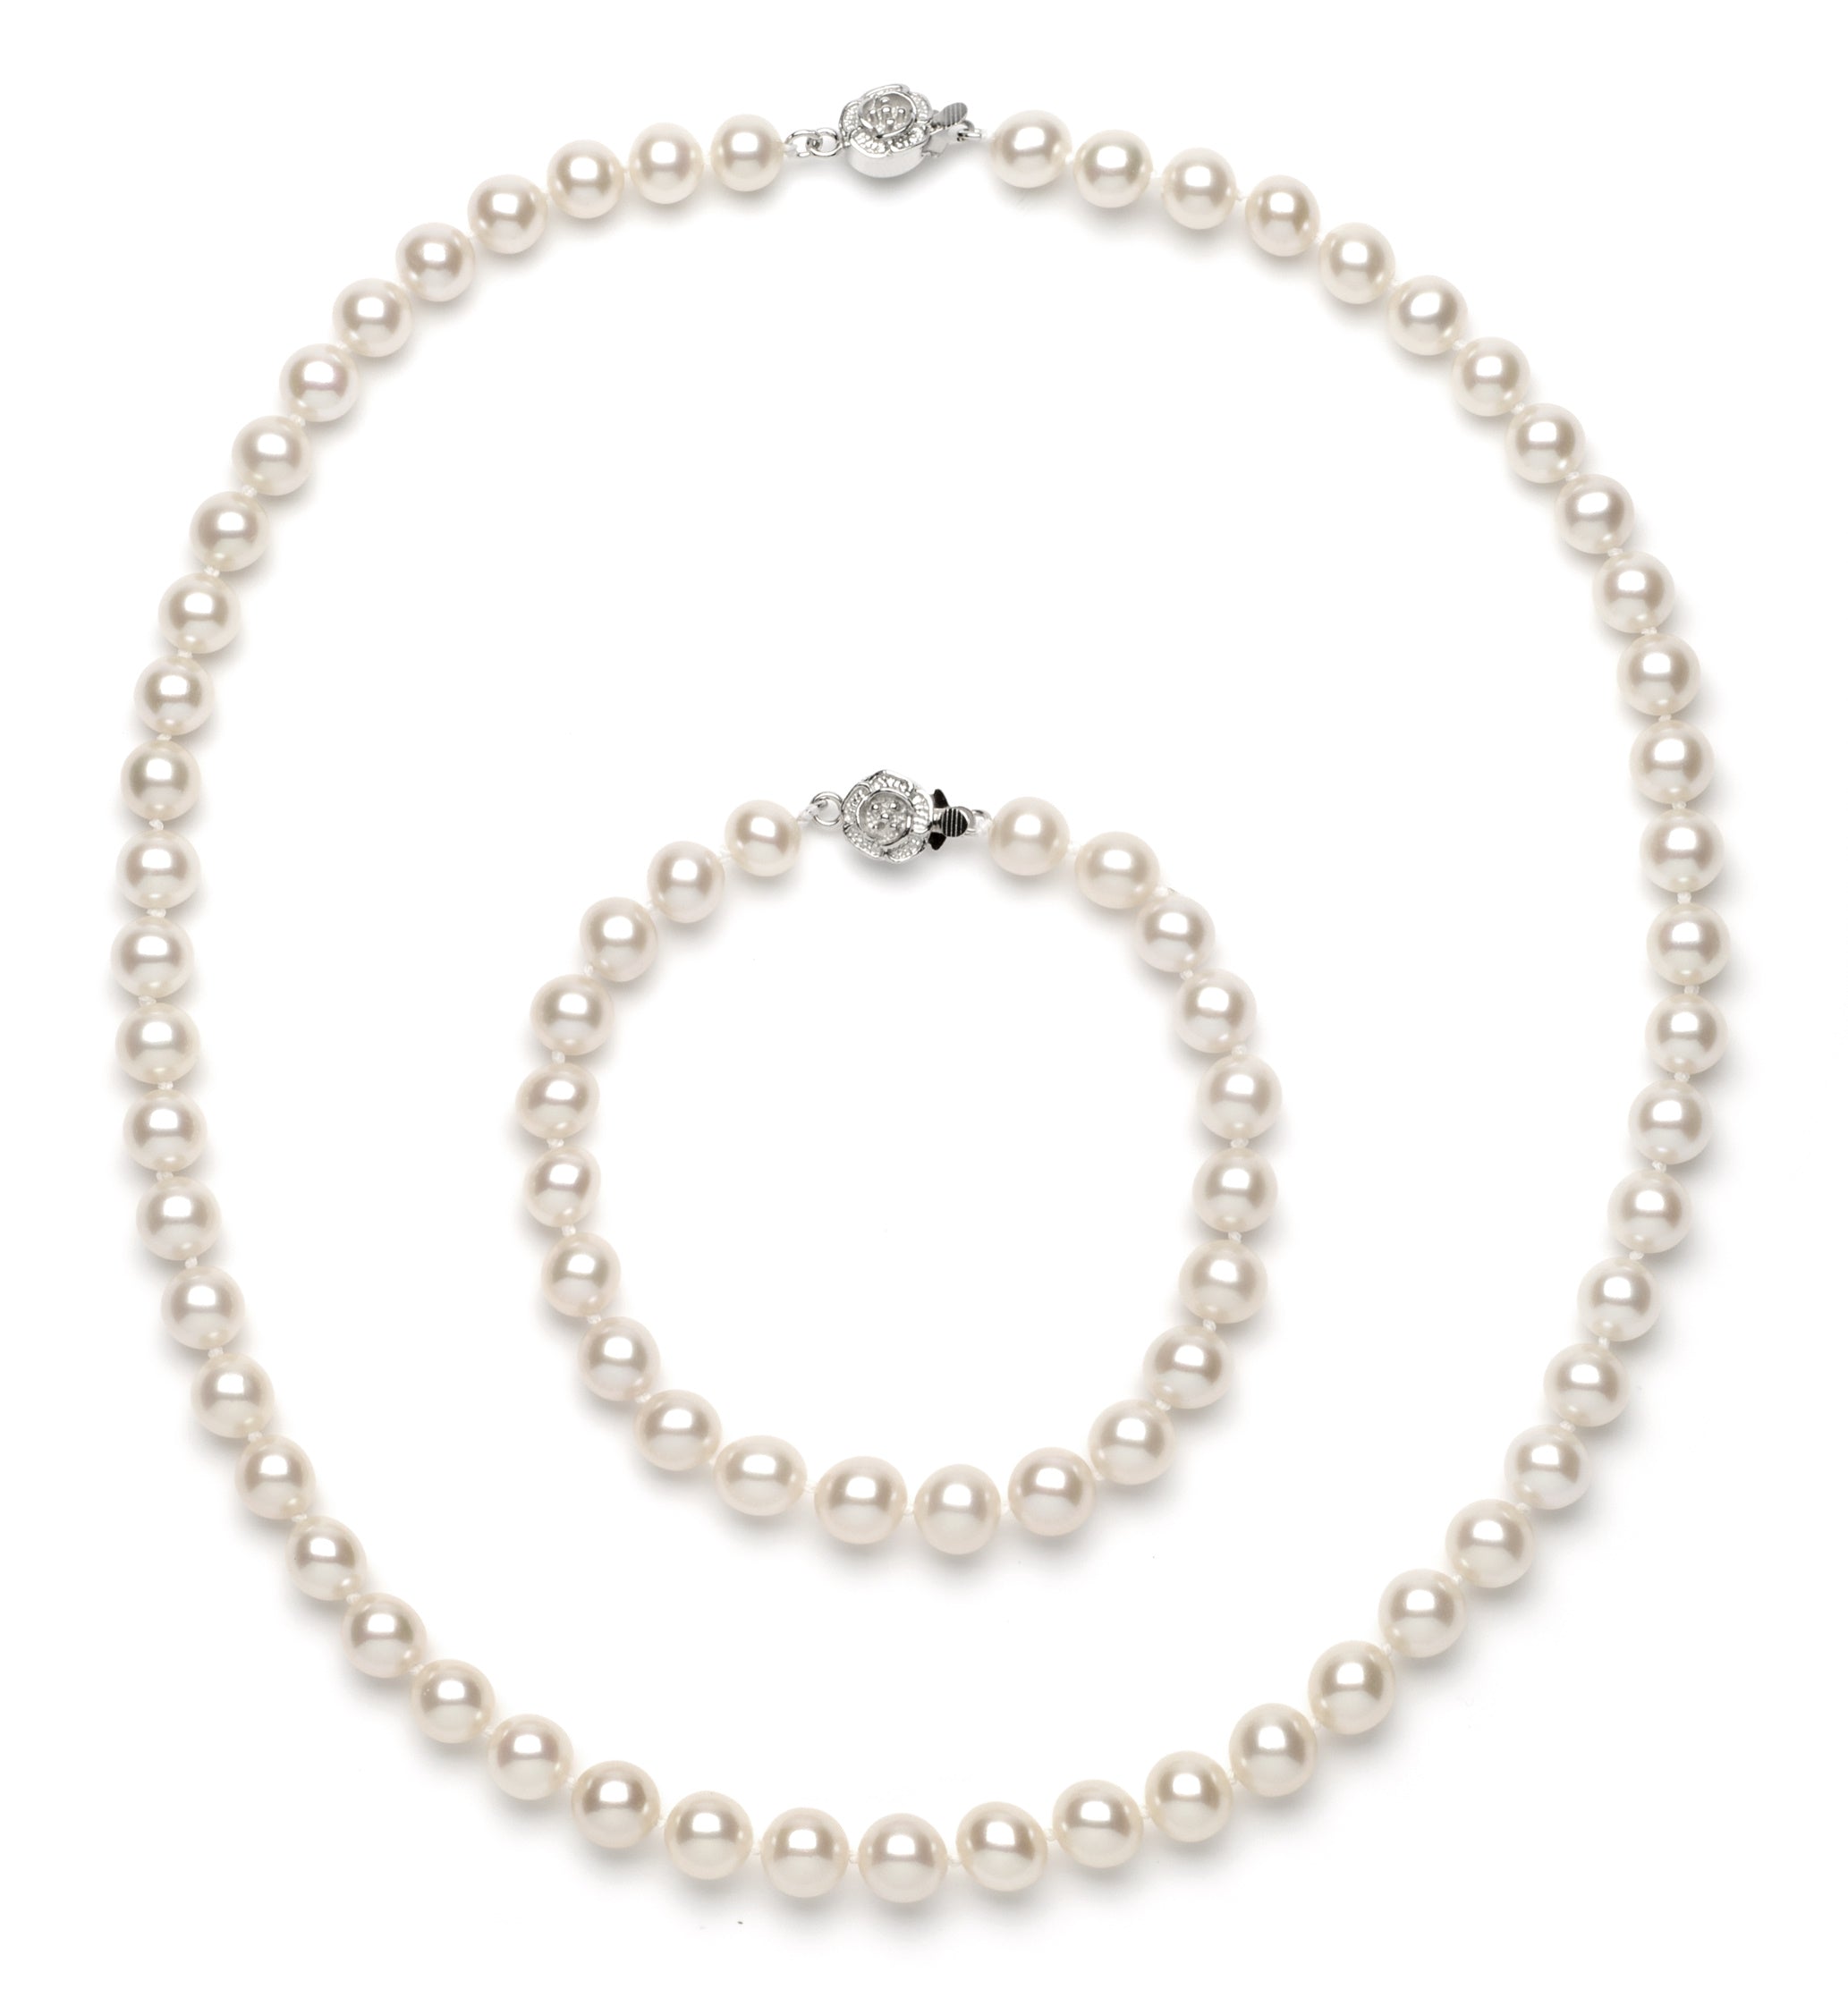 Necklace/Bracelet Set 8.0-9.0 mm White Freshwater Pearls